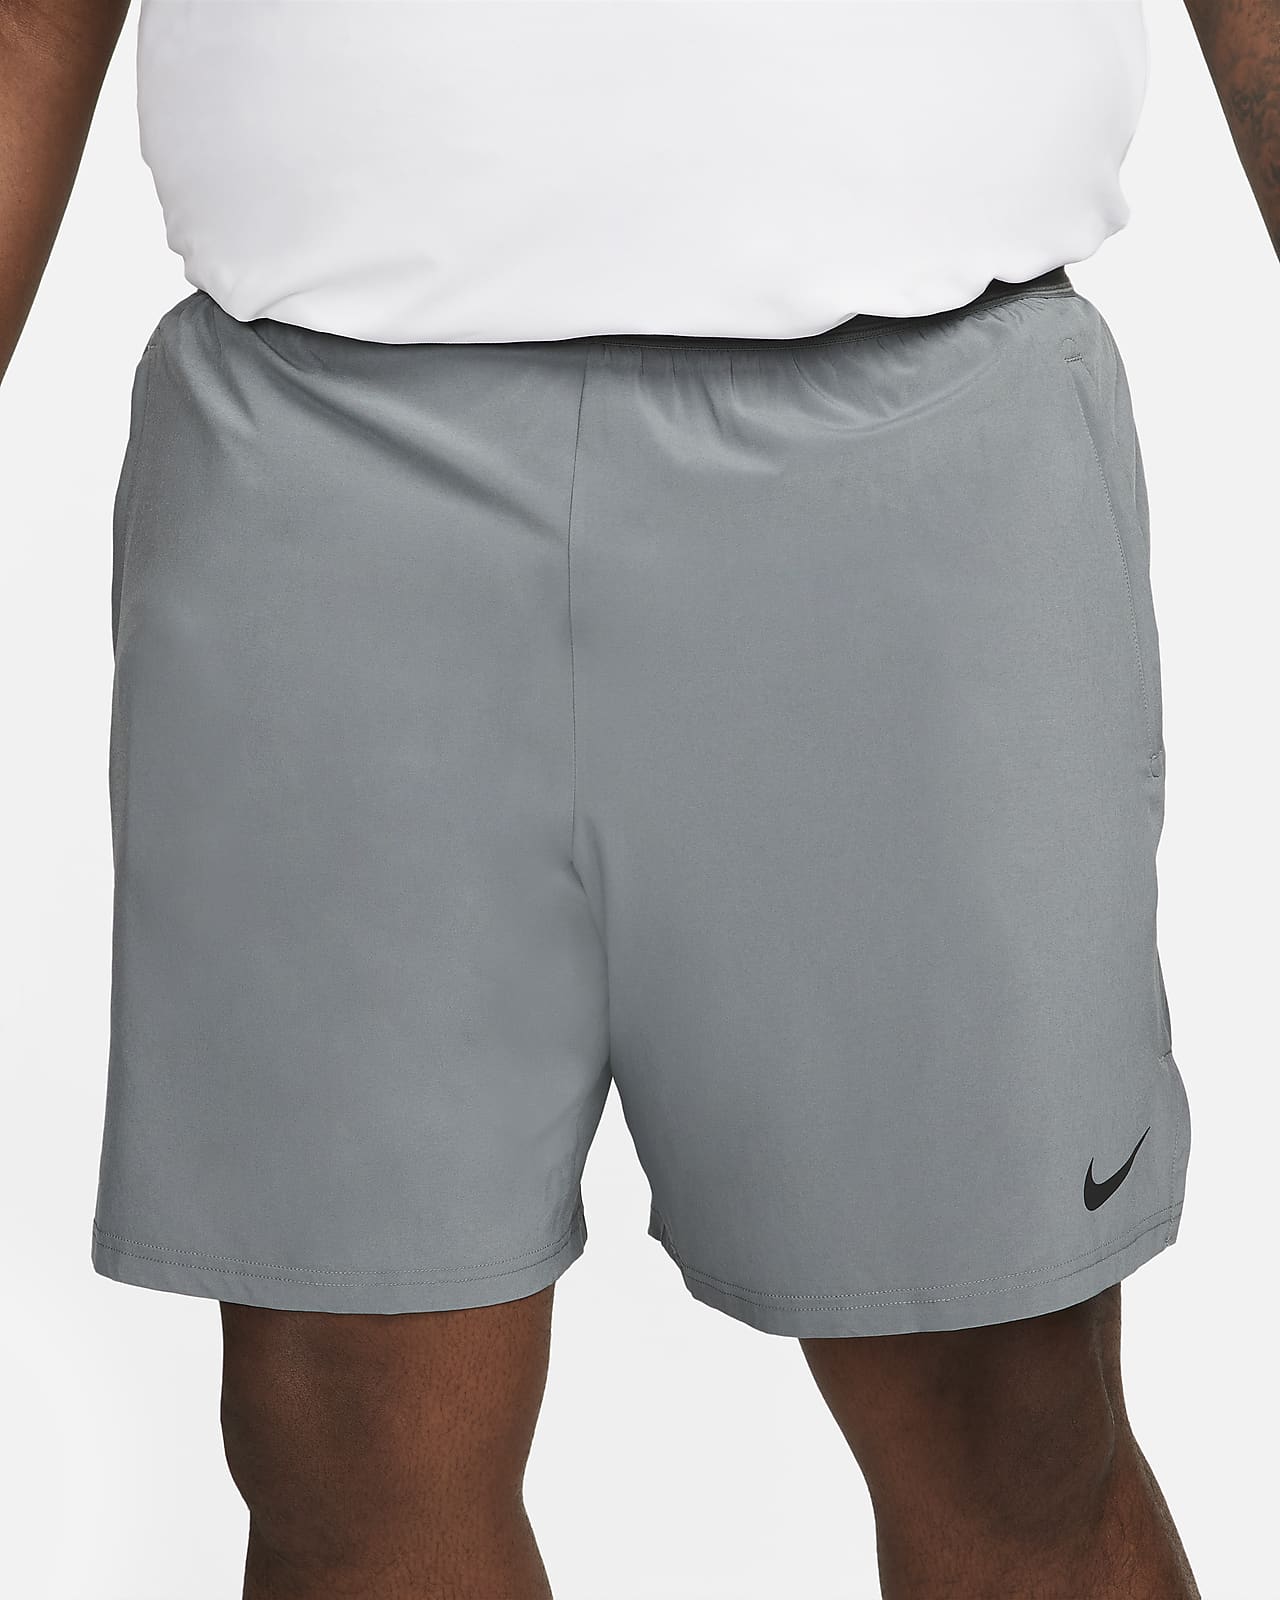  Nike Compression Shorts Men